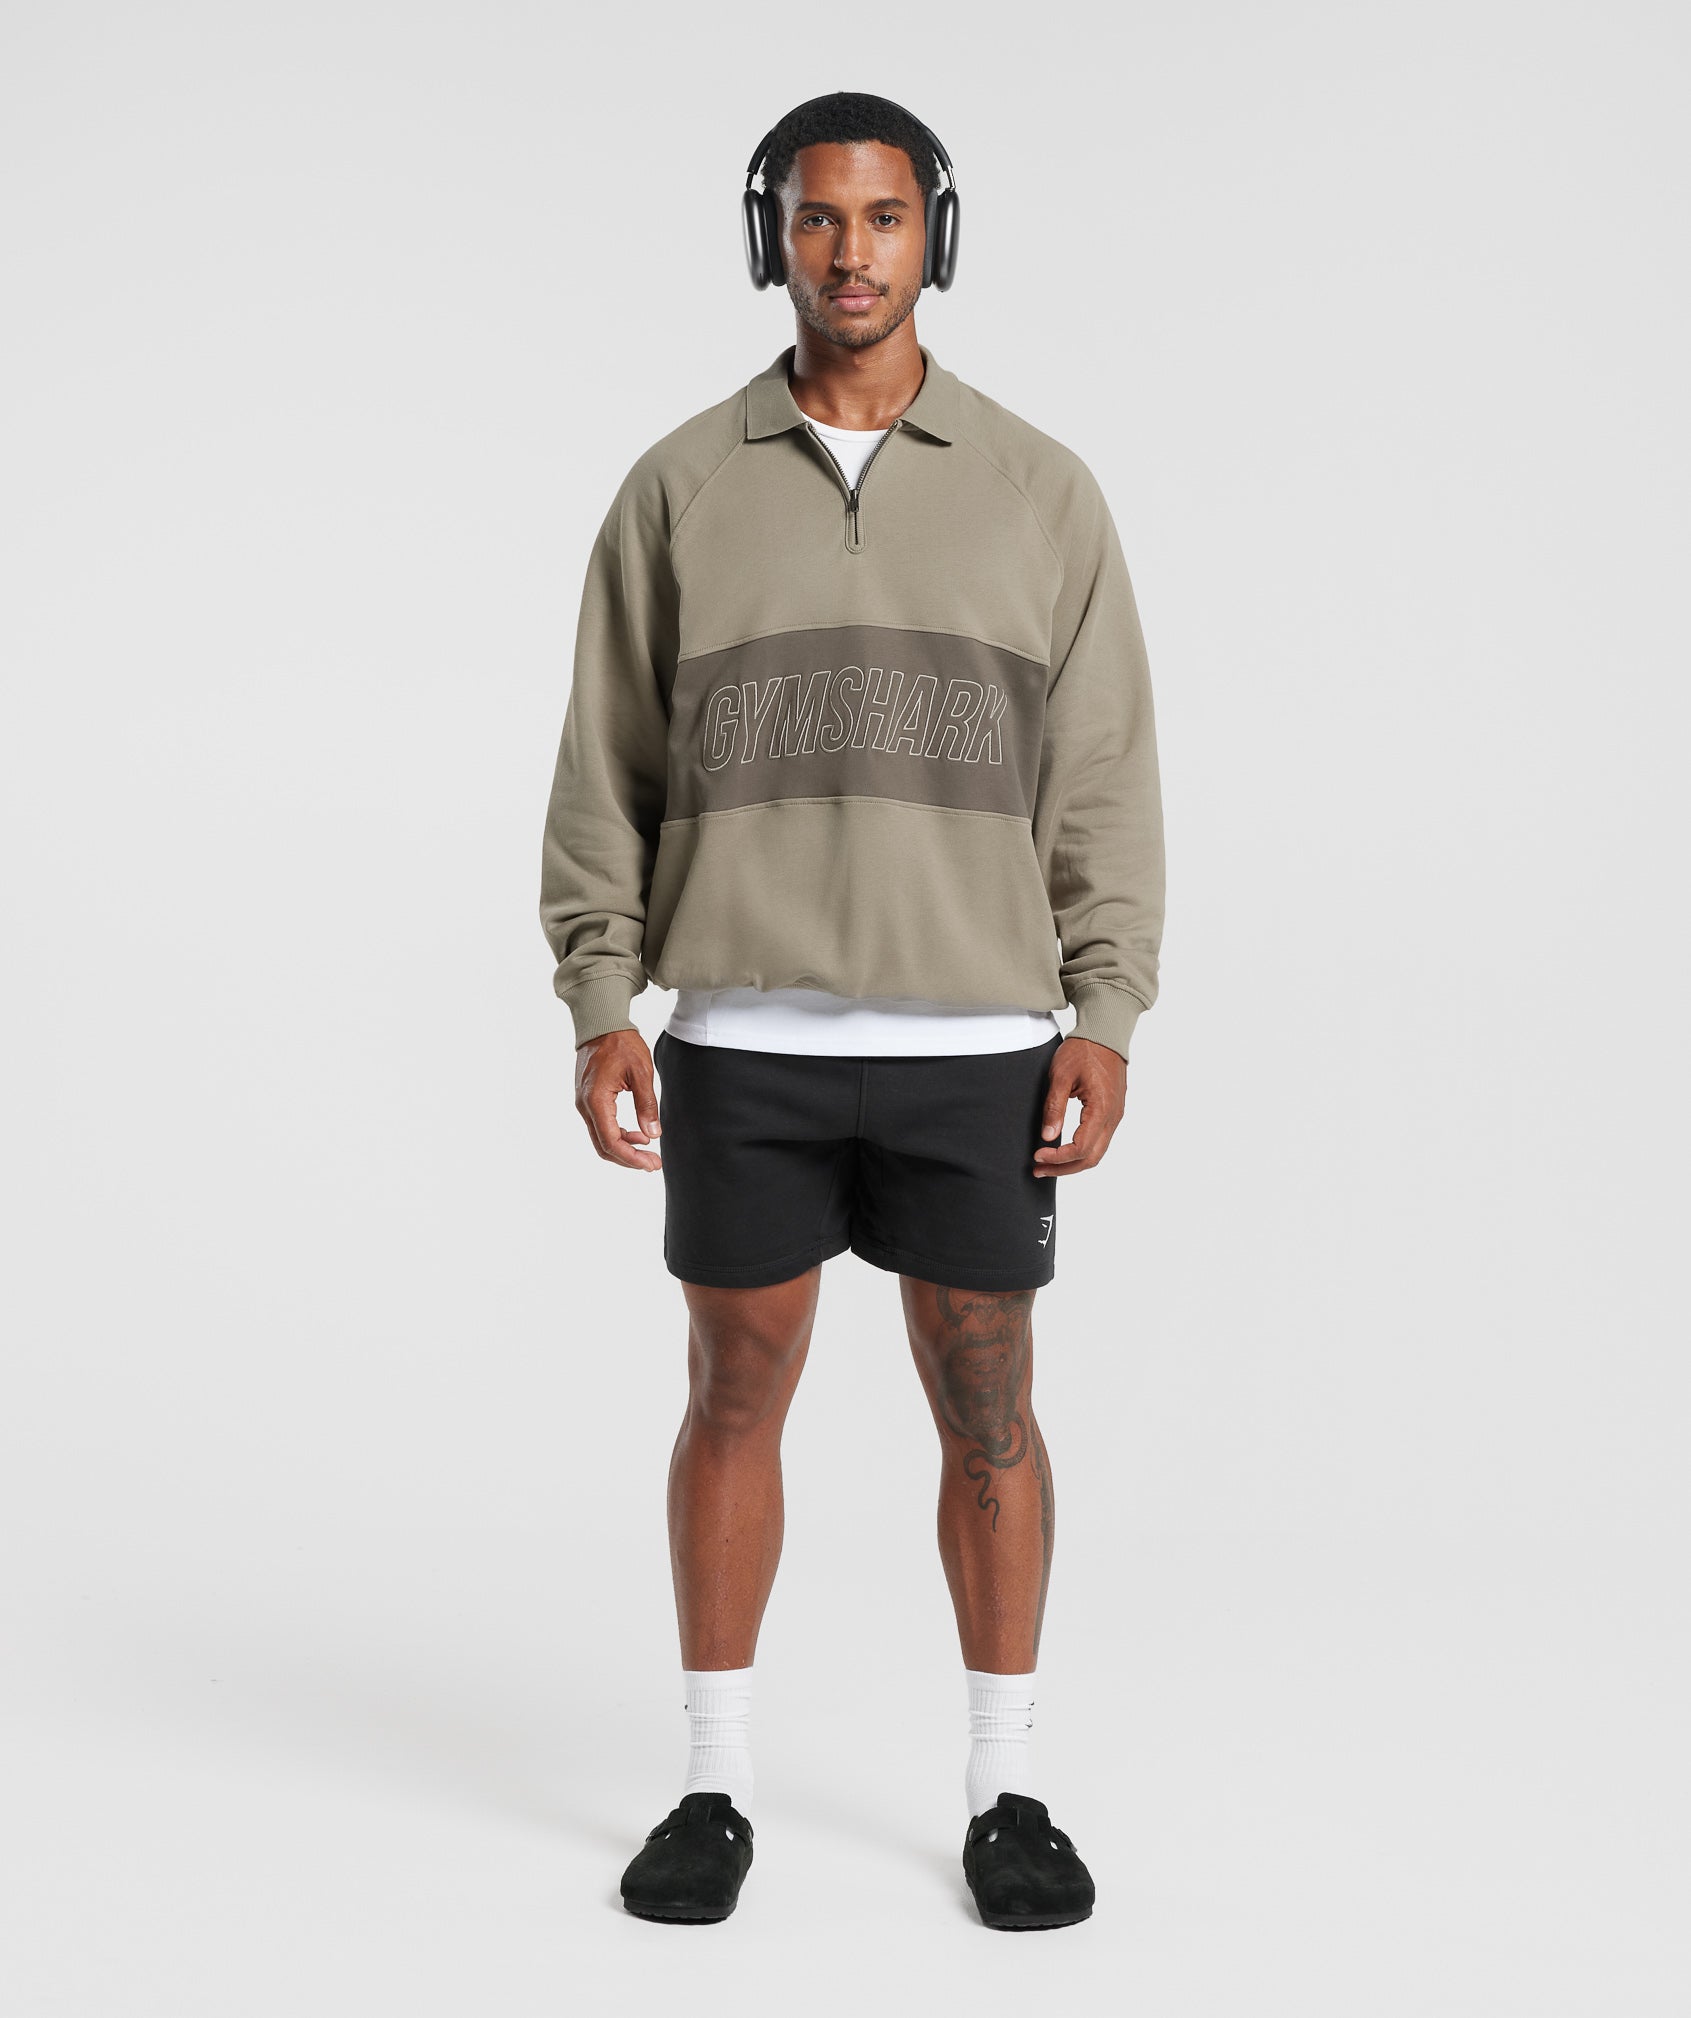 Rest Day Essentials Sweatshirt Polo in Linen Brown/Camo Brown - view 4